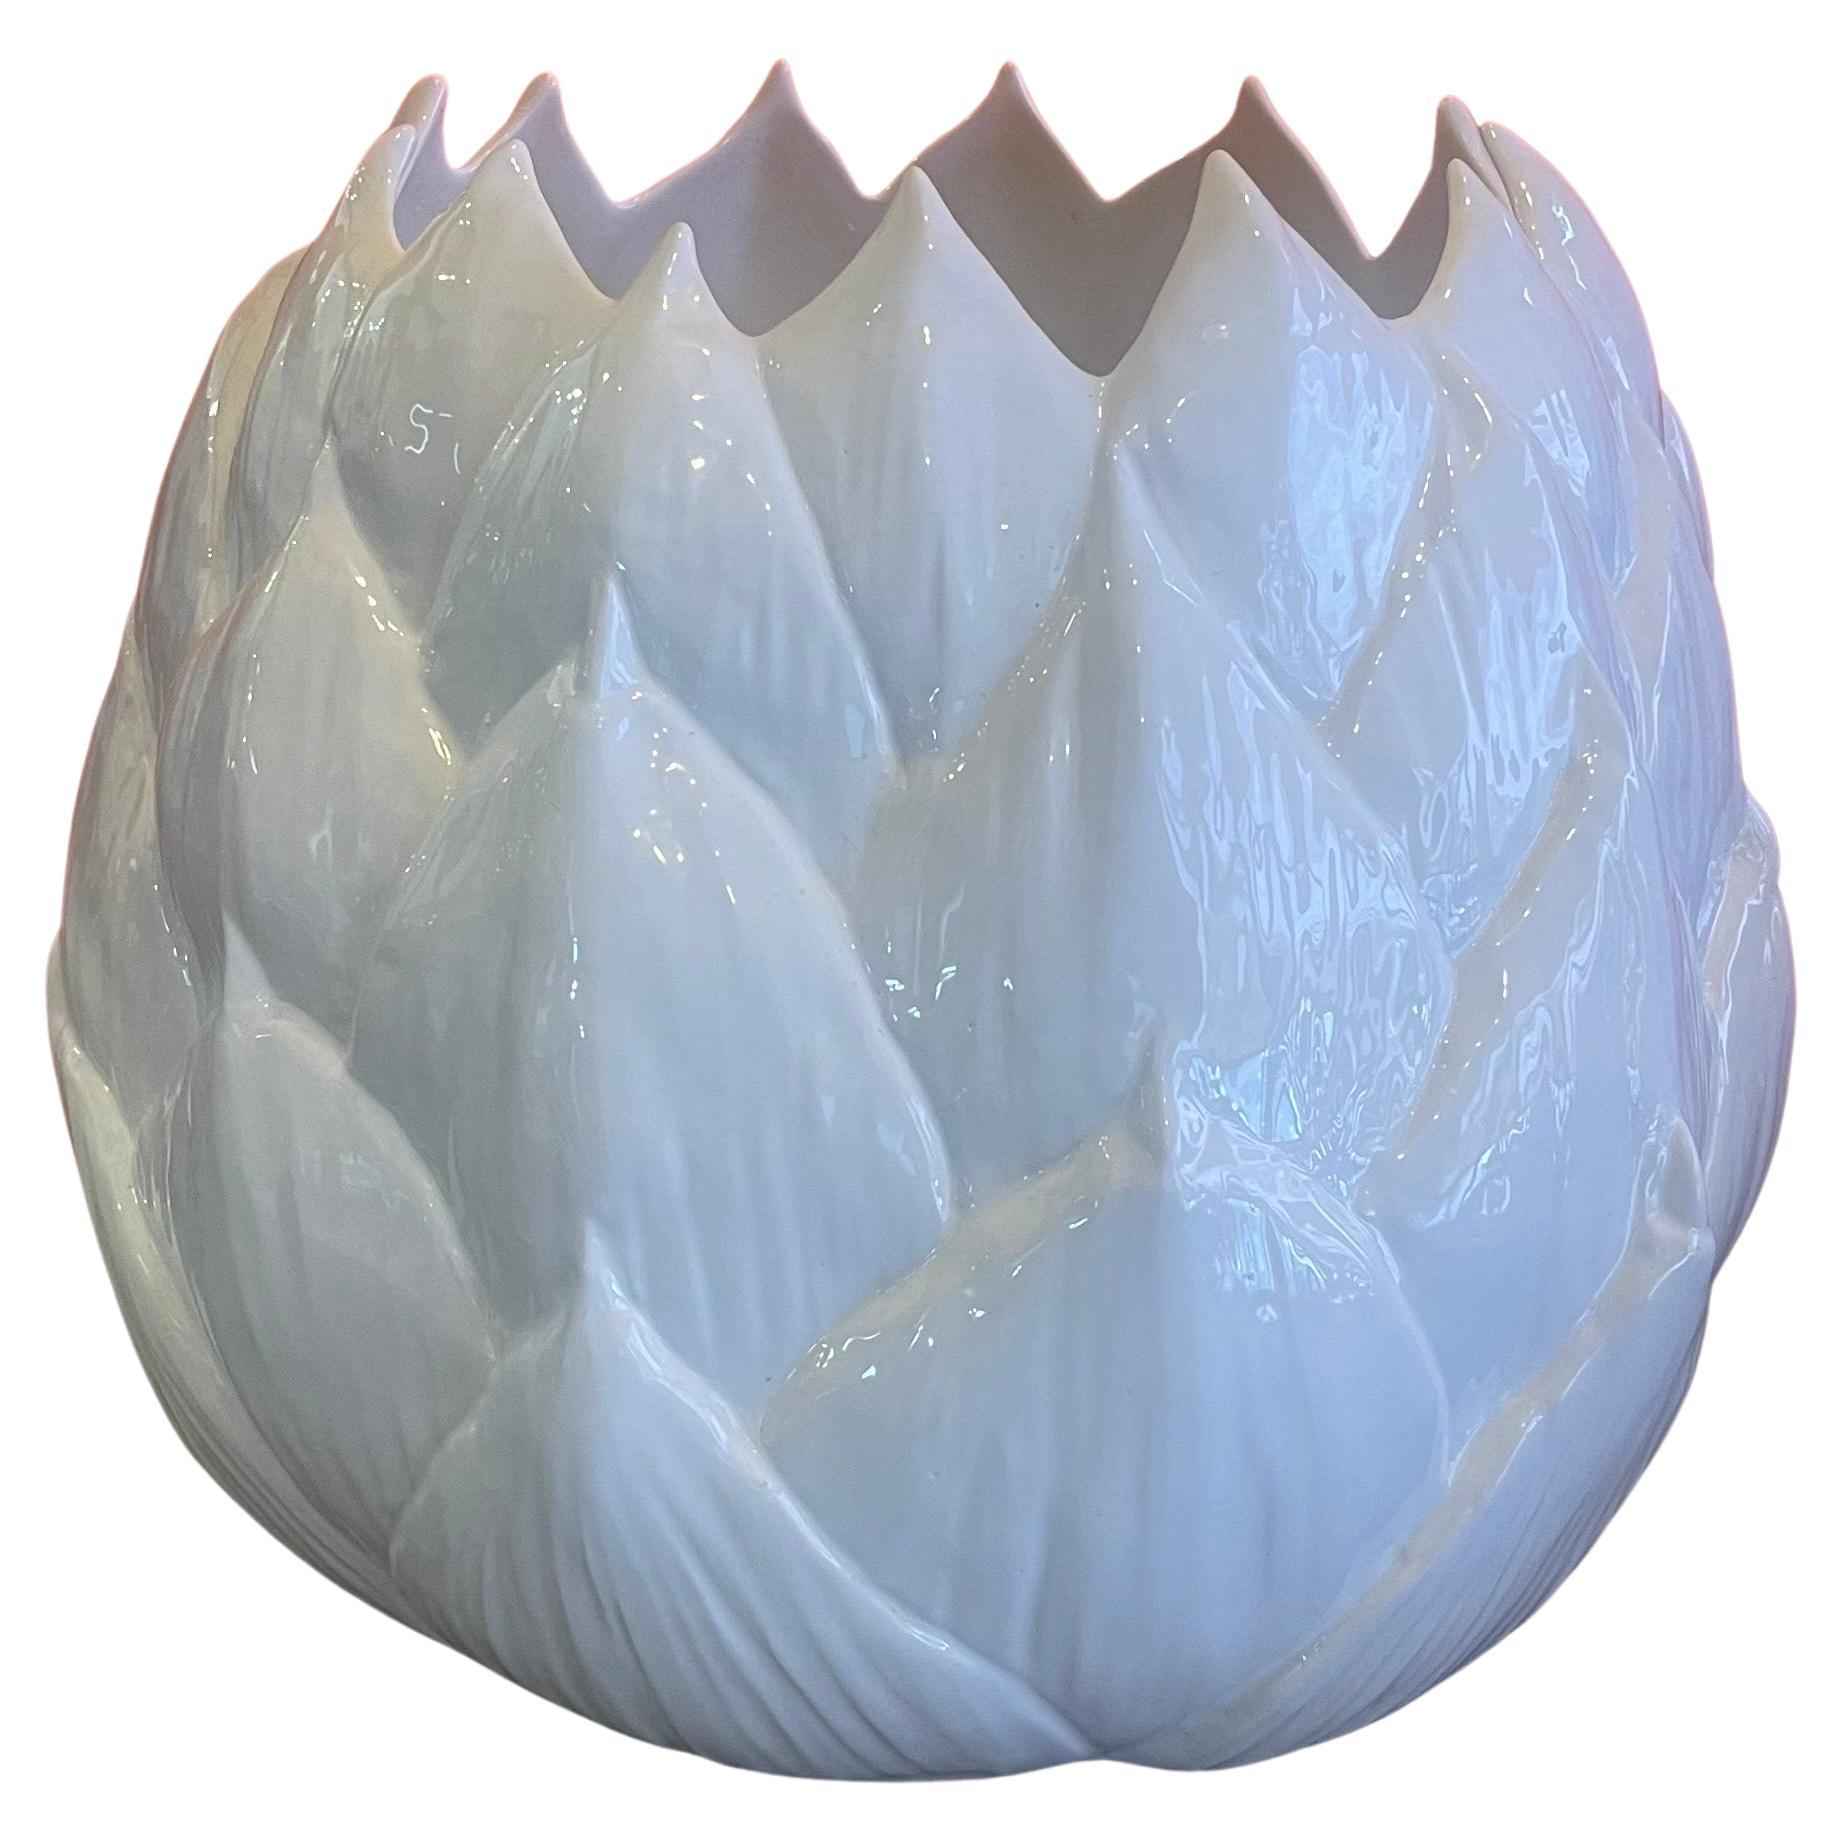 Large Porcelain "Artichoke" Shaped Jardiniere / Planter by Taste Seller by Sigma For Sale